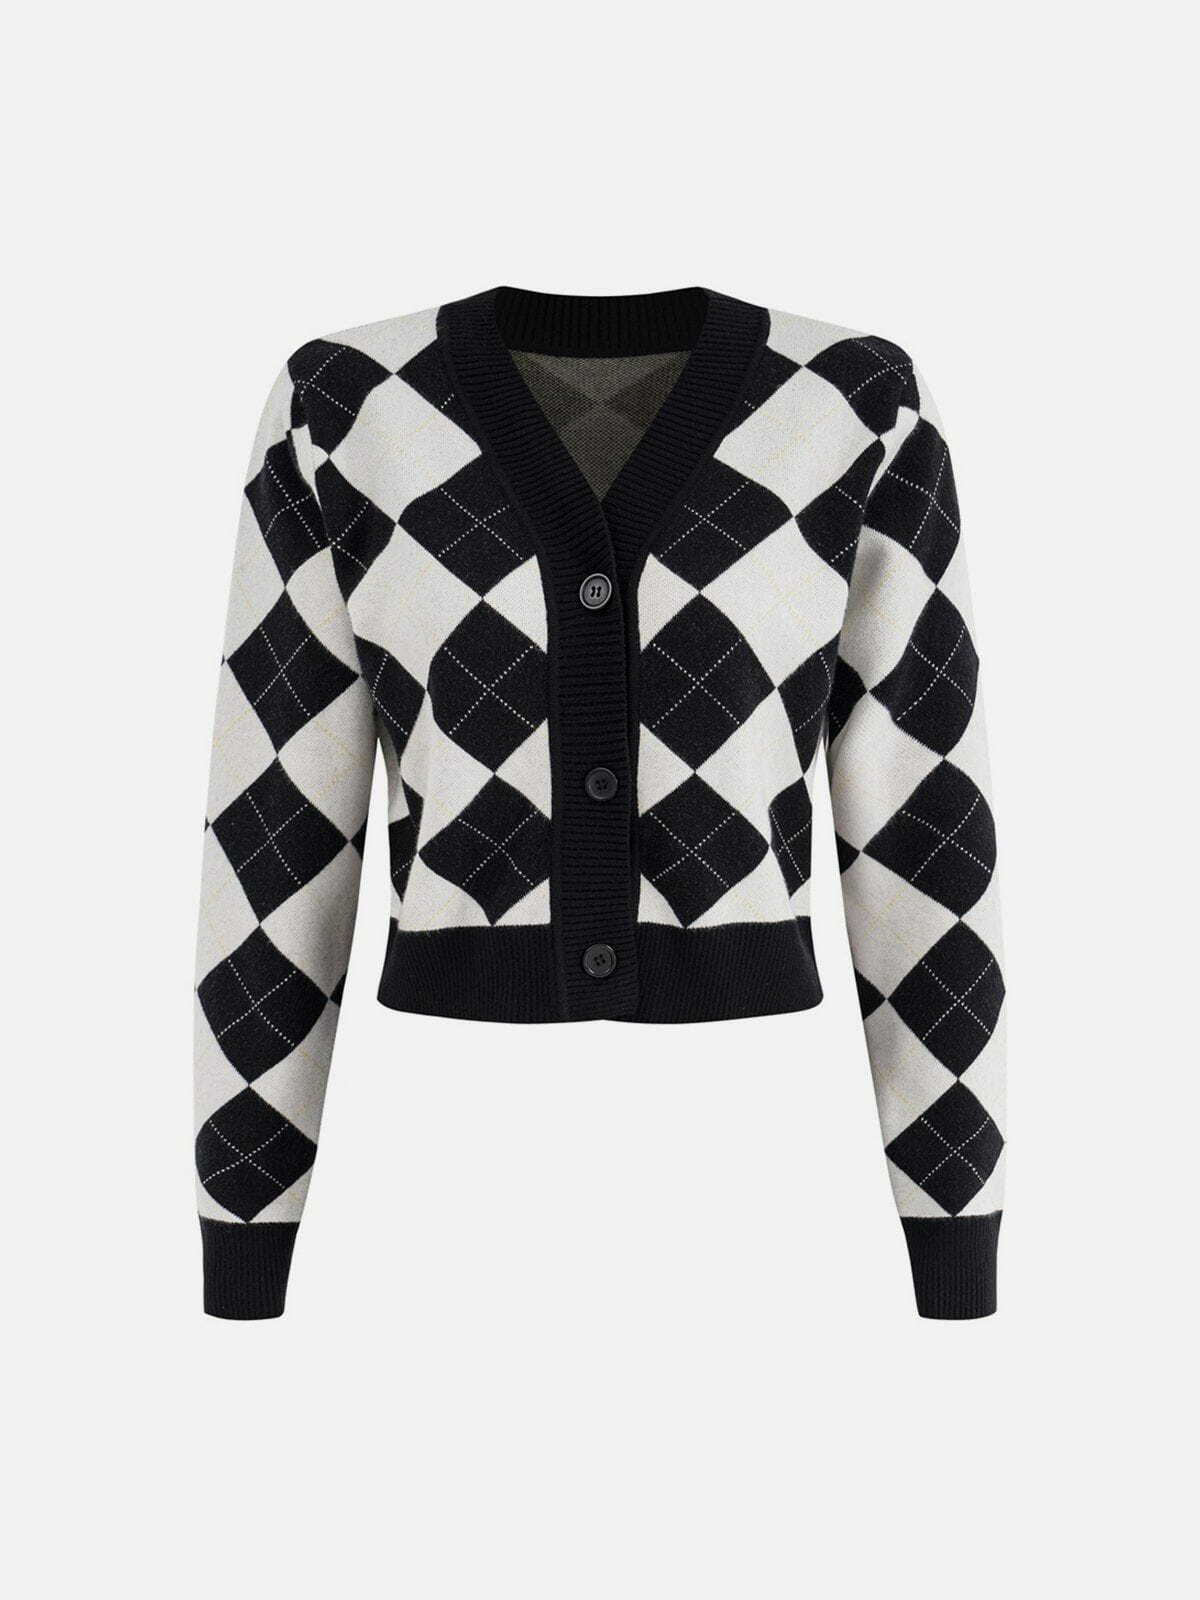 plaid minimalist slim fit sweater urban y2k style 7208